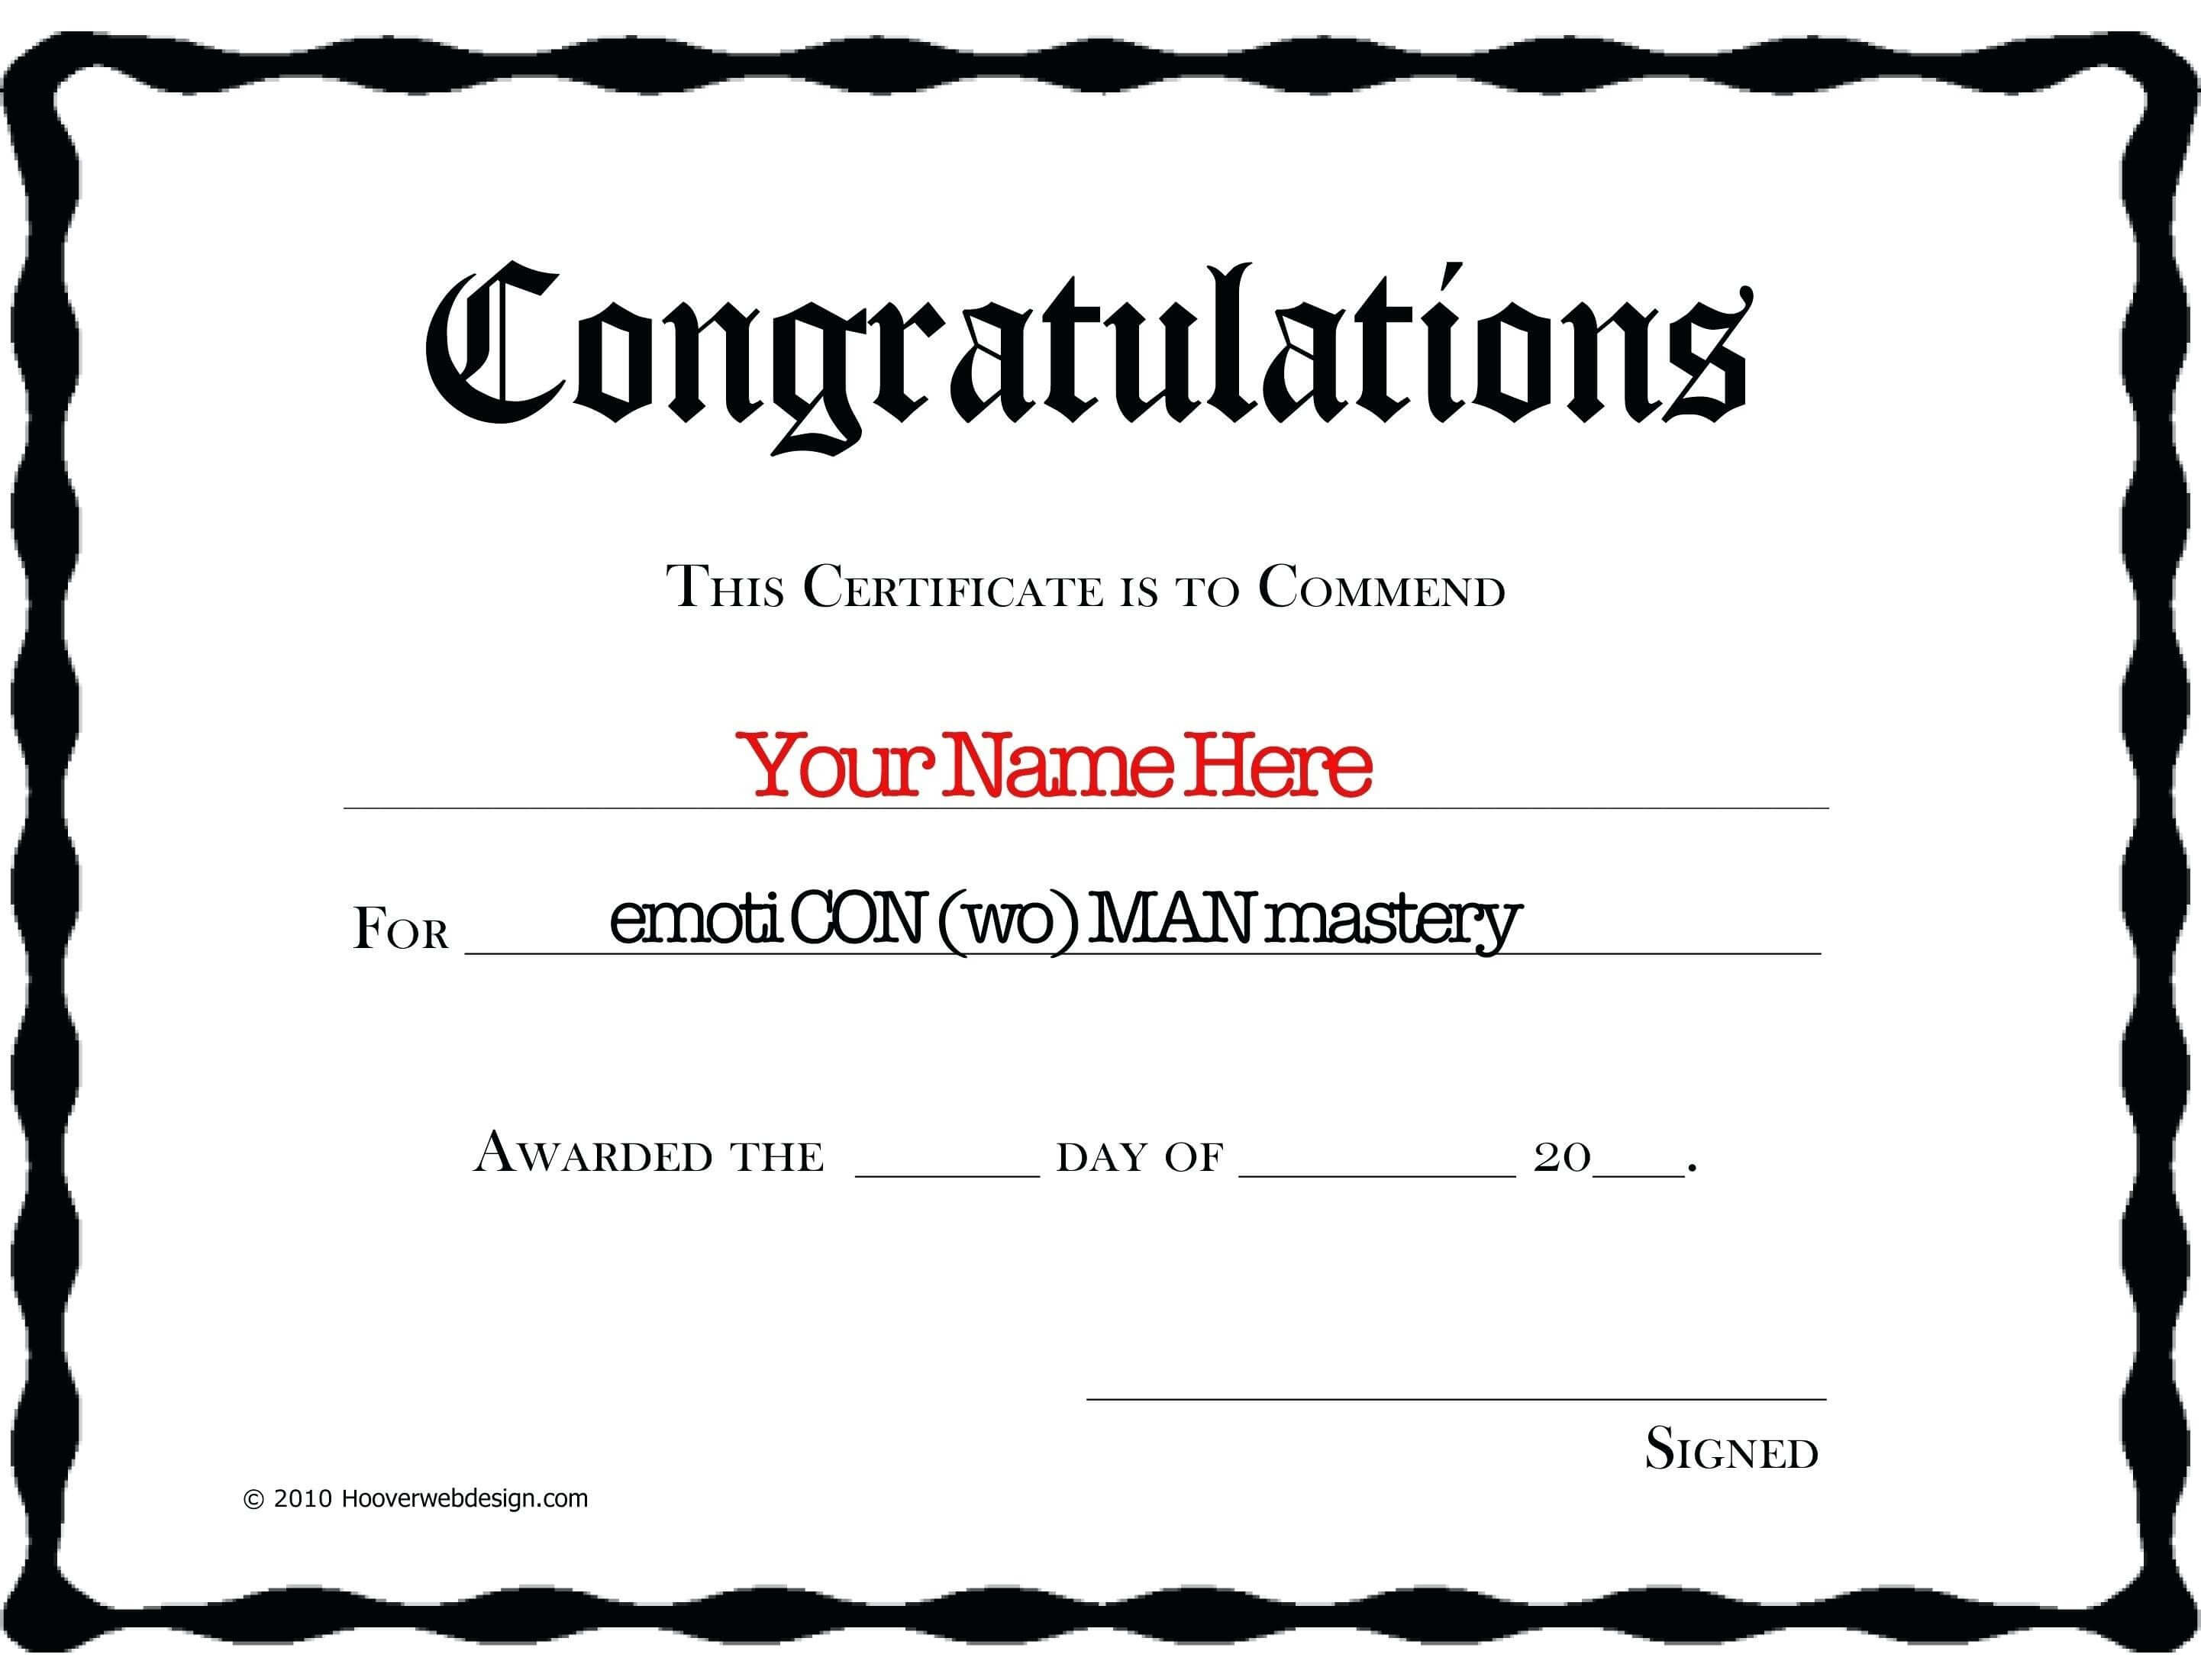 Congratulations Certificate Word Template – Bizoptimizer Throughout Congratulations Certificate Word Template